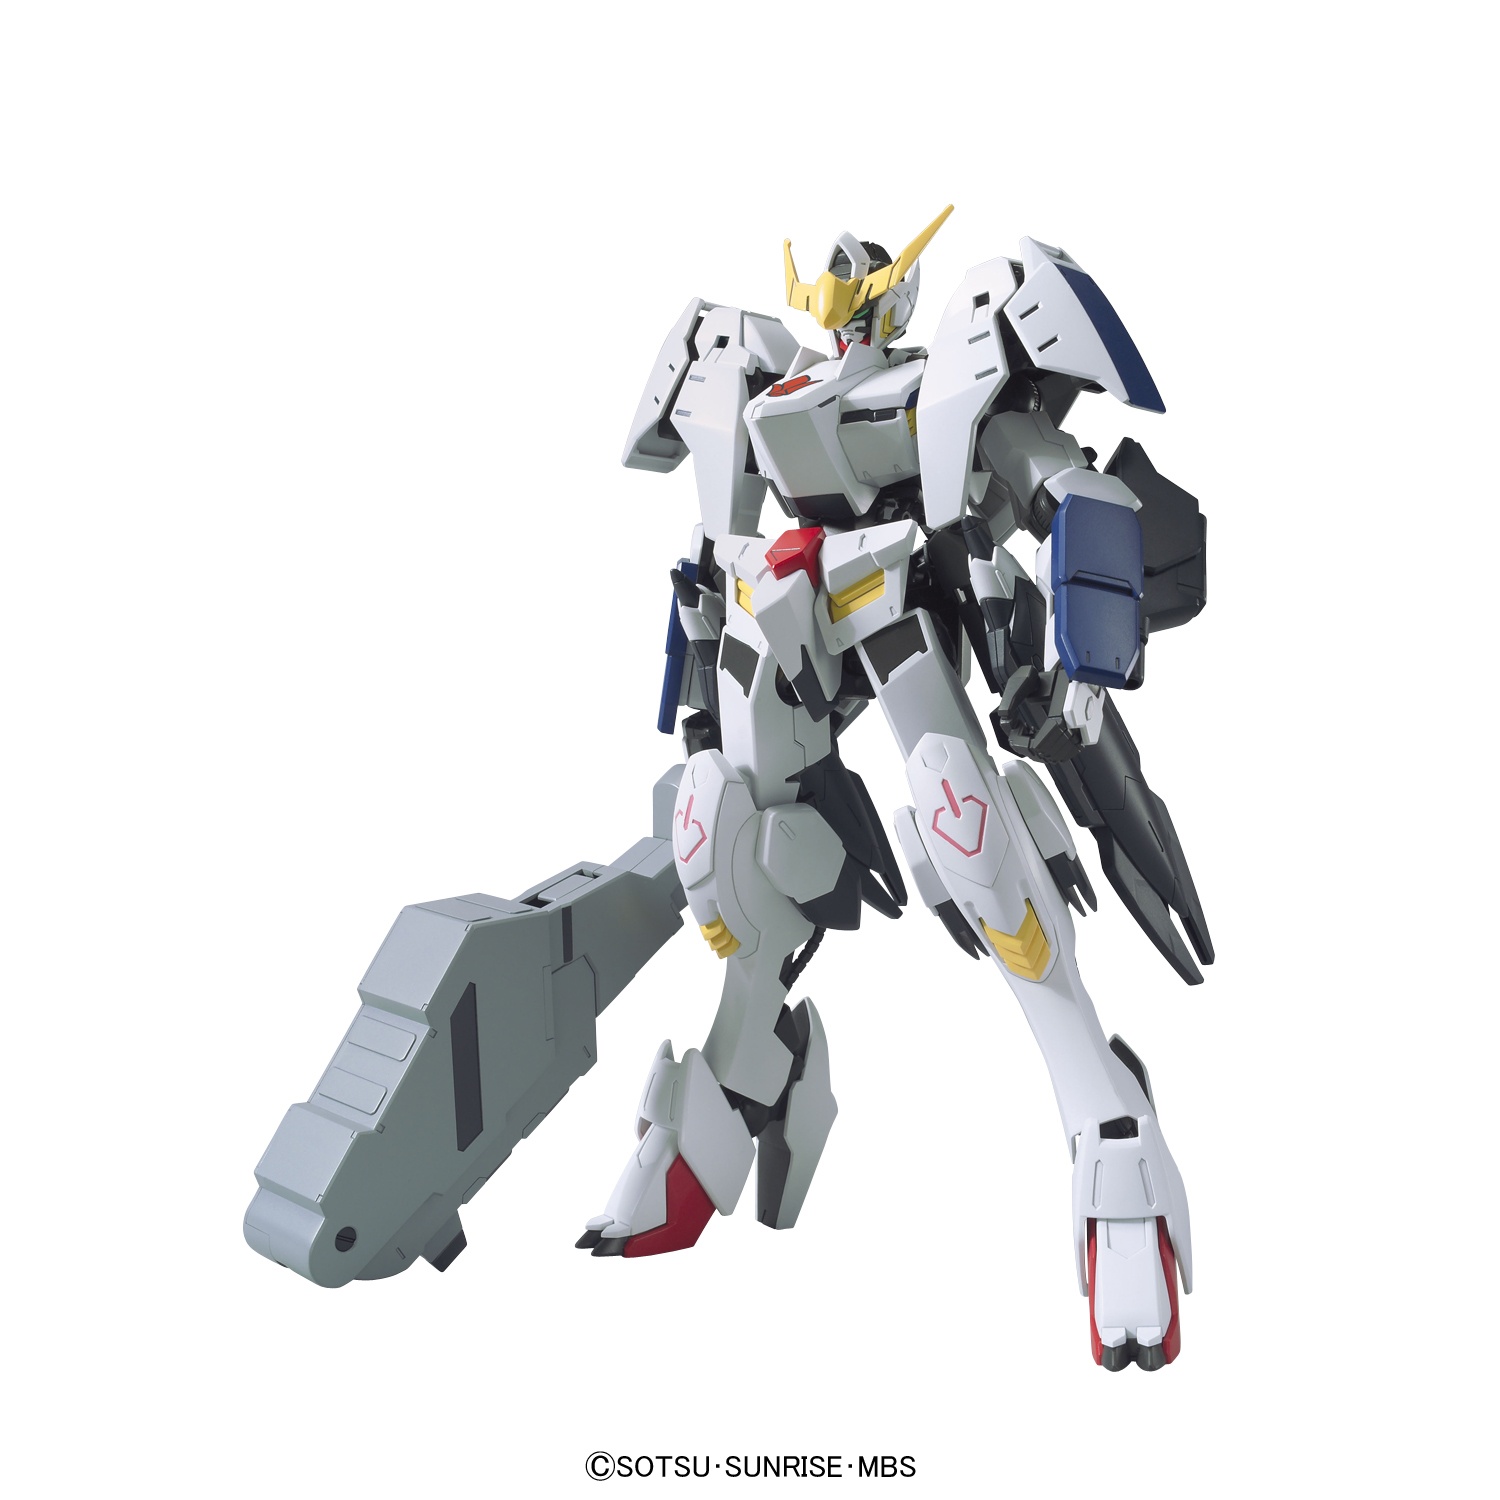 Armor Detail-up 2.0mm Metal Air Hole Parts Set For Bandai MG HG Gundam Model Kit 